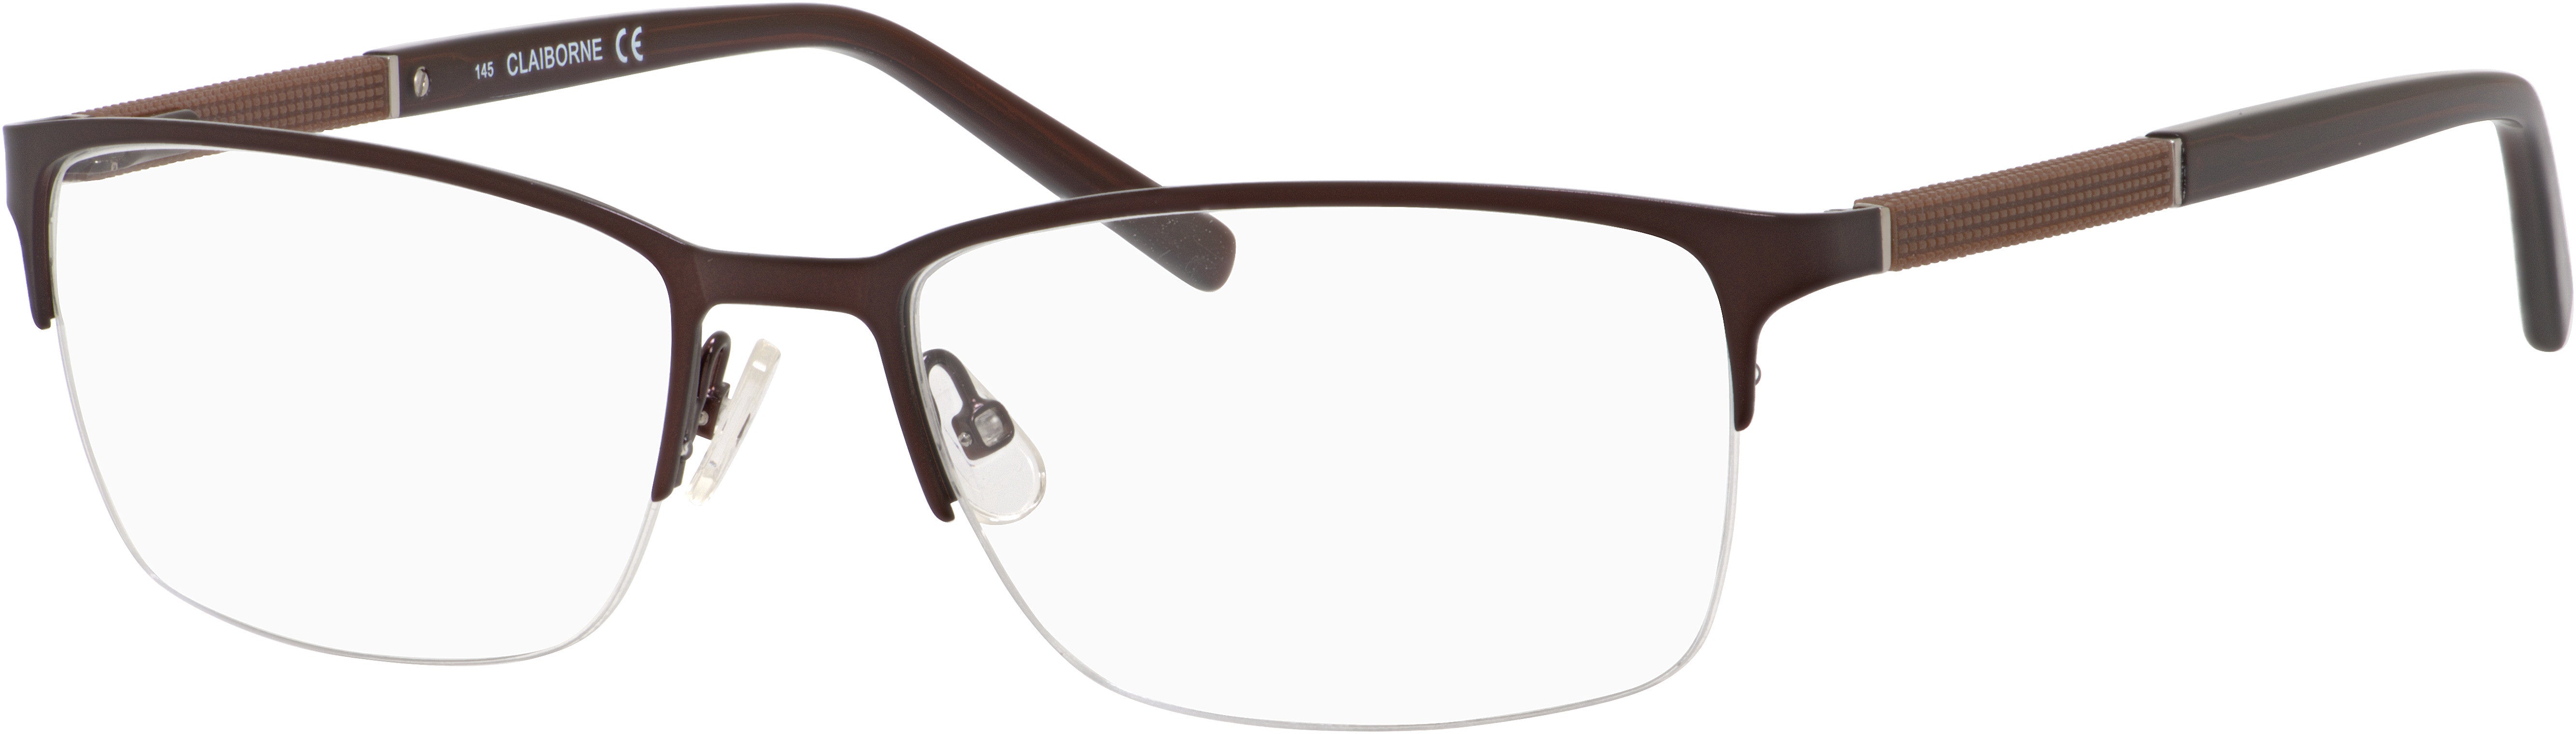  Claiborne 225 Rectangular Eyeglasses 0DV3-0DV3  Brown (00 Demo Lens)